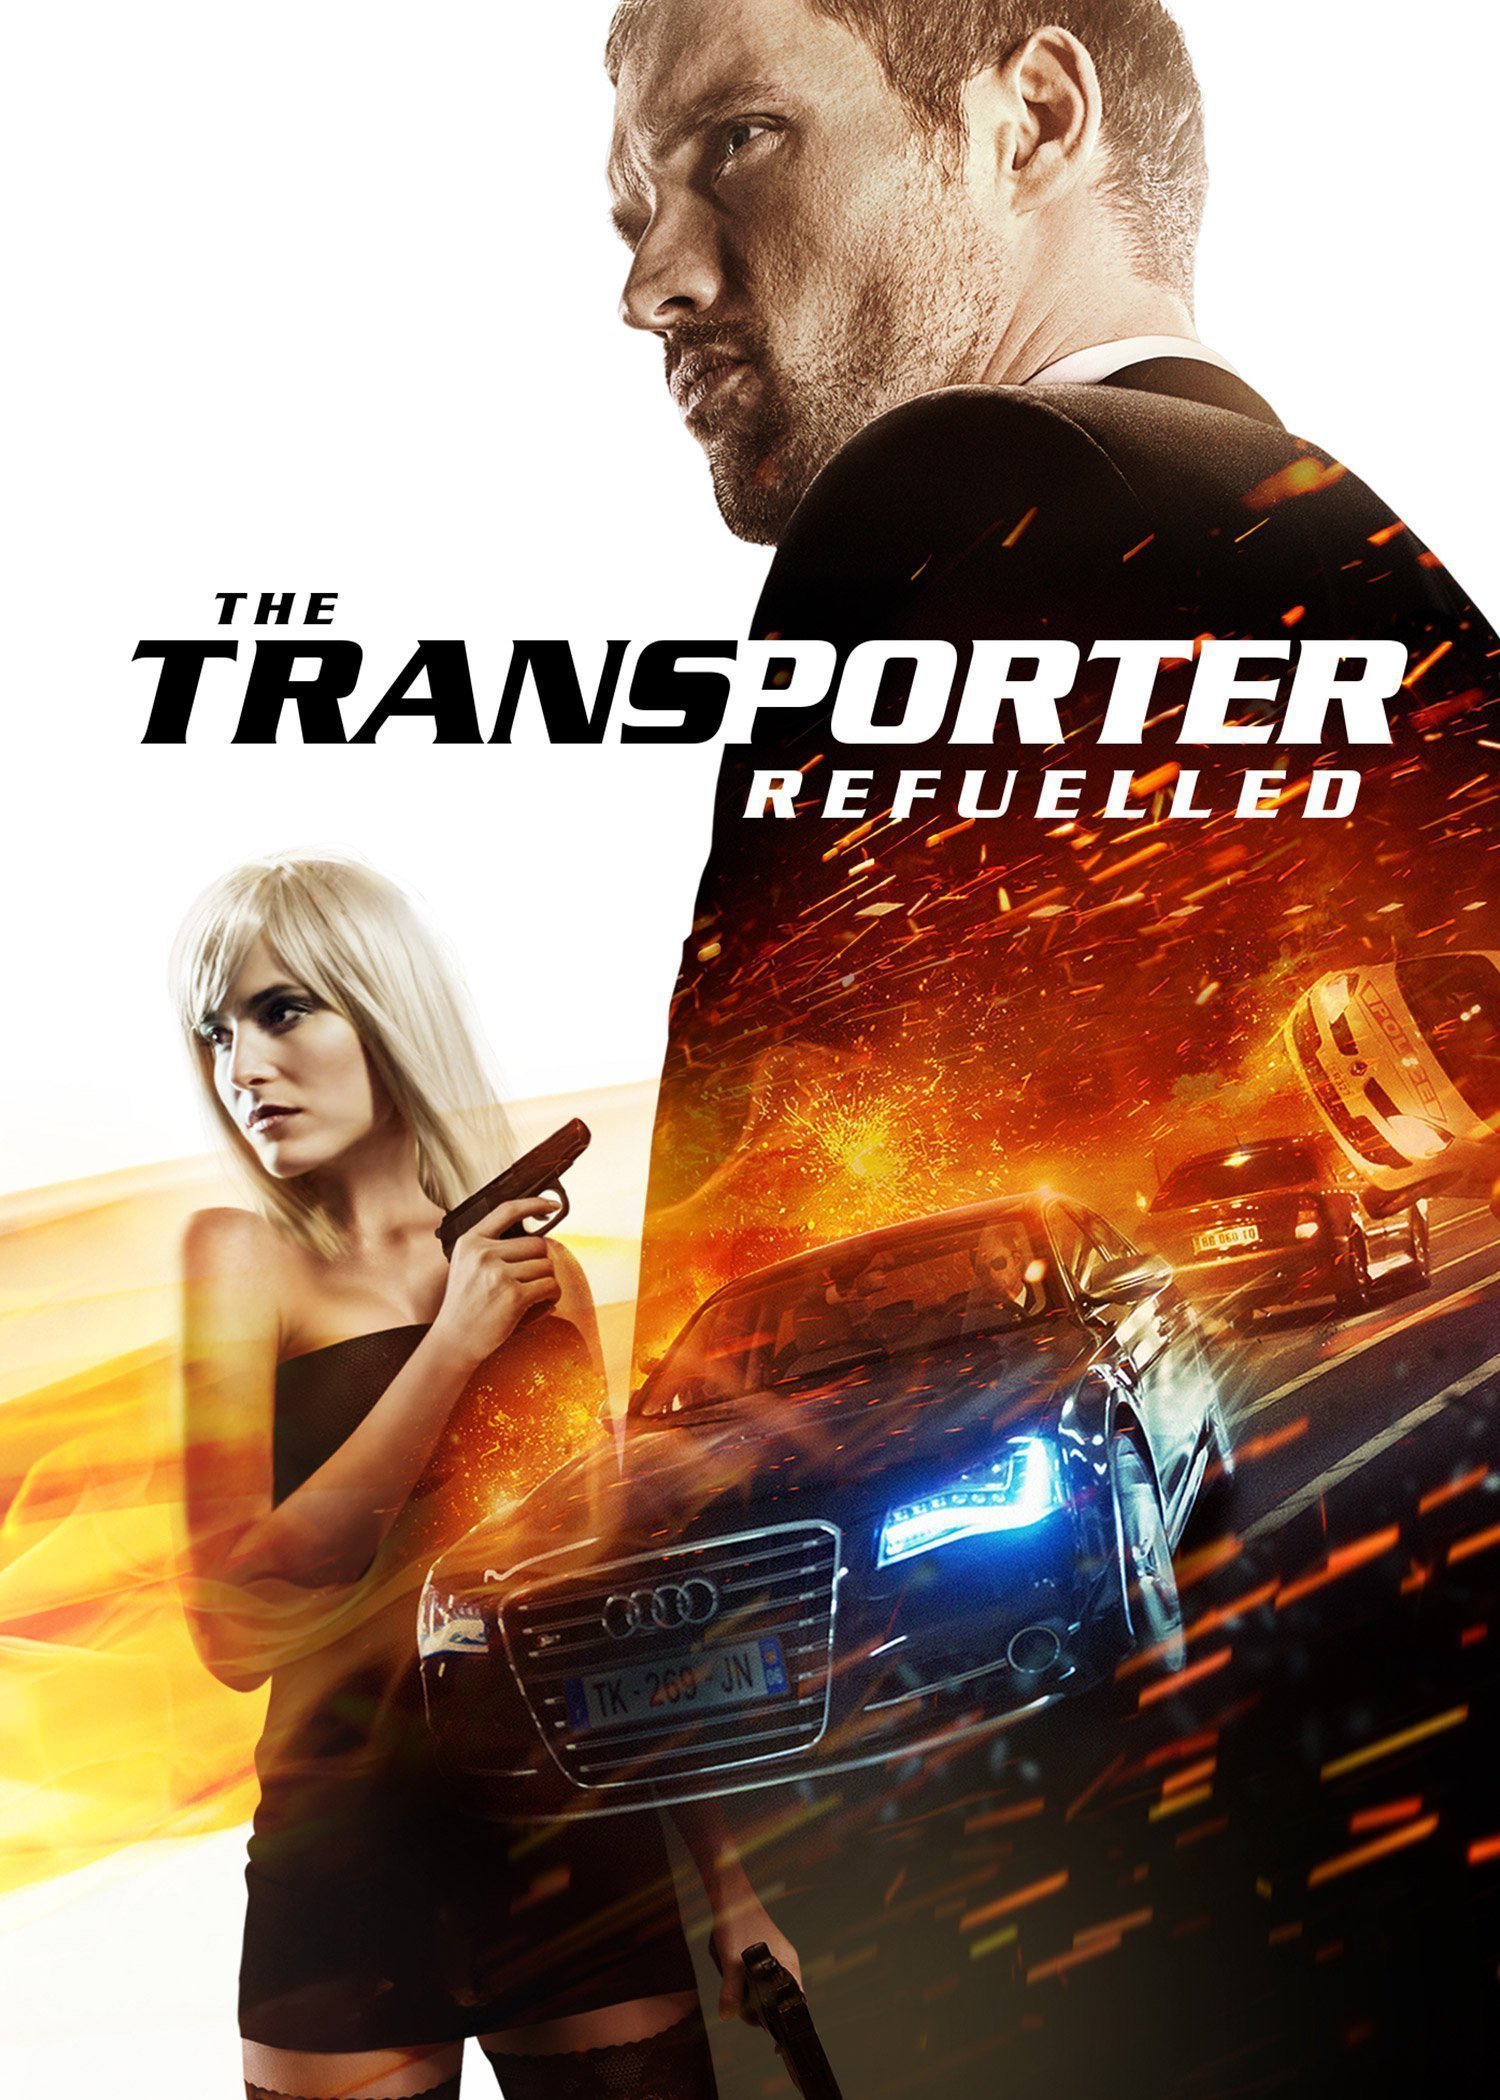 The Transporter Refuelled - Movies - Buy/Rent - Rakuten TV